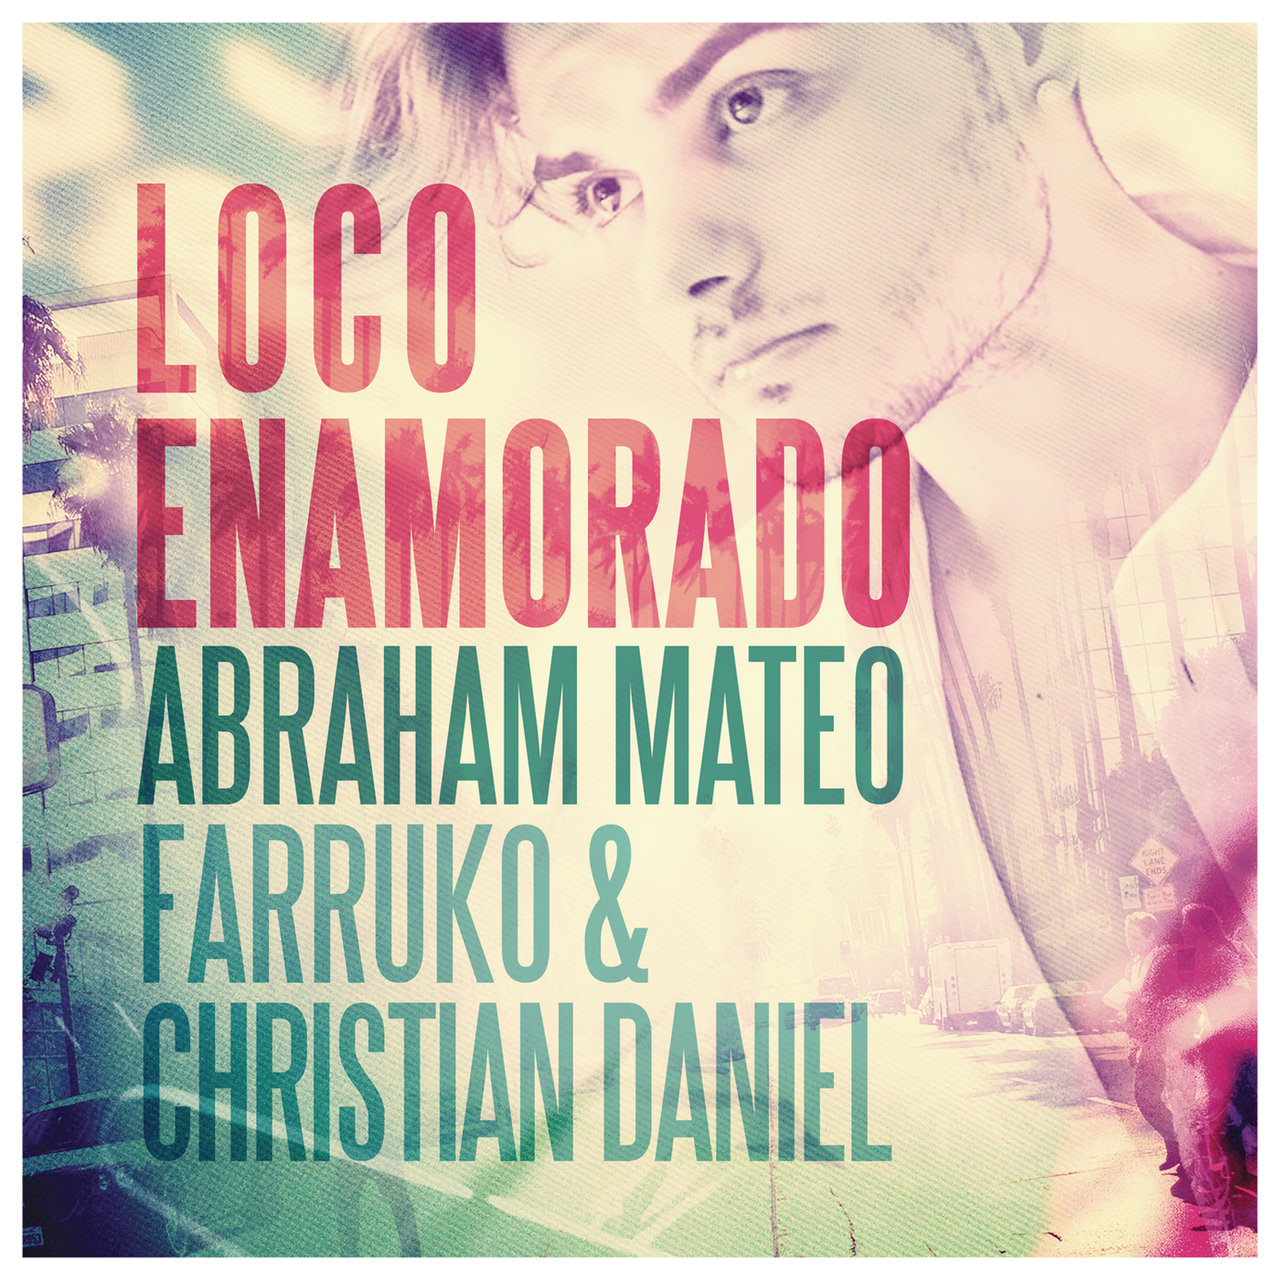 Abraham Mateo, Farruko, & Christian Daniel Loco Enamorado cover artwork